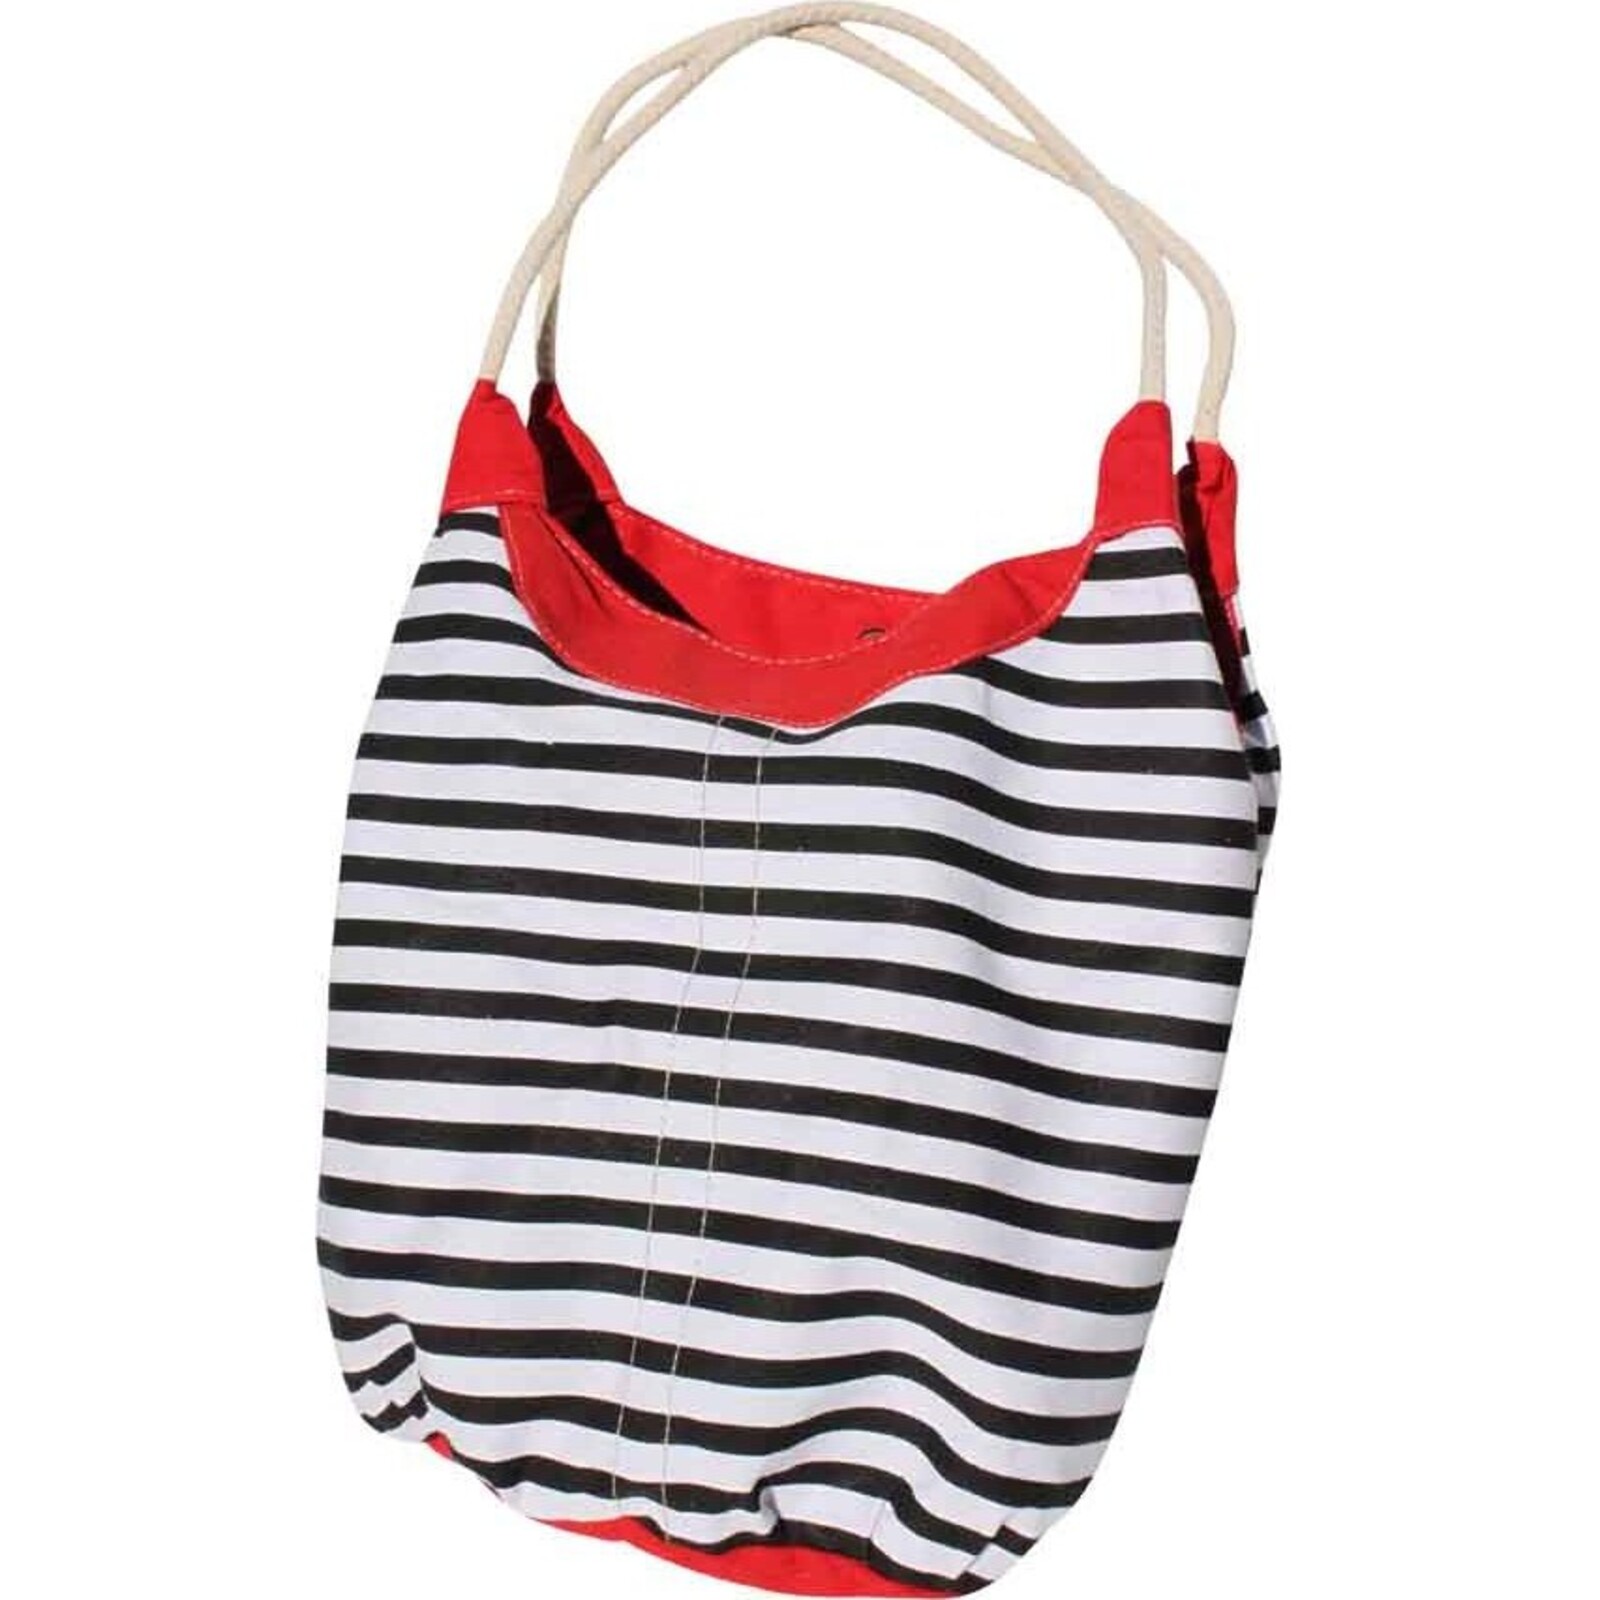 Casual Bag - Black Stripe Red